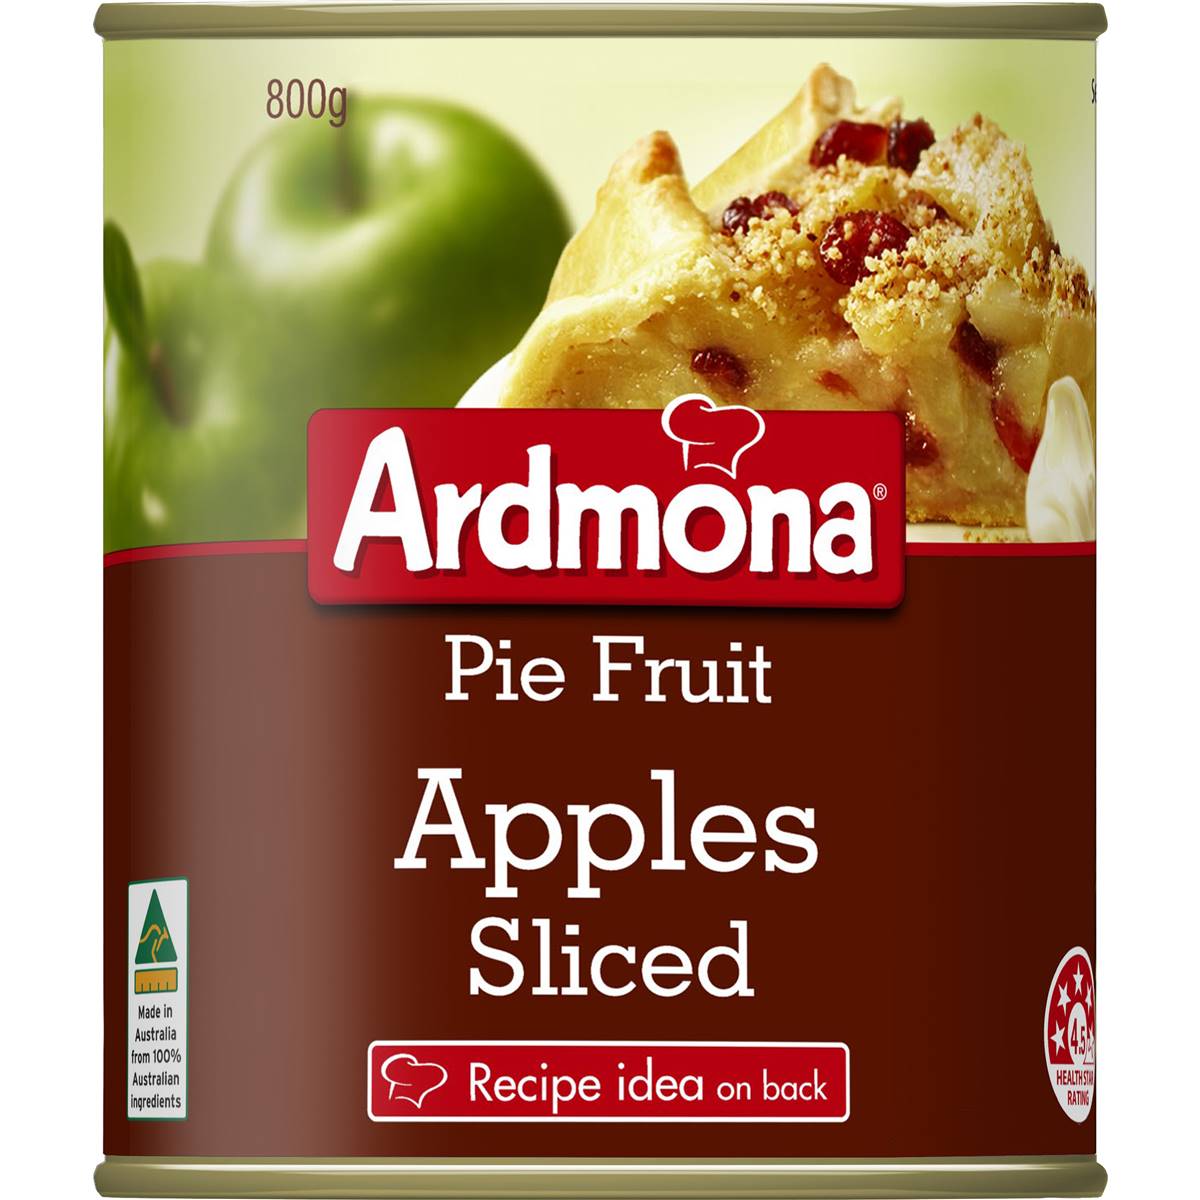 Calories in Ardmona Pie Fruit Apples Sliced Sliced